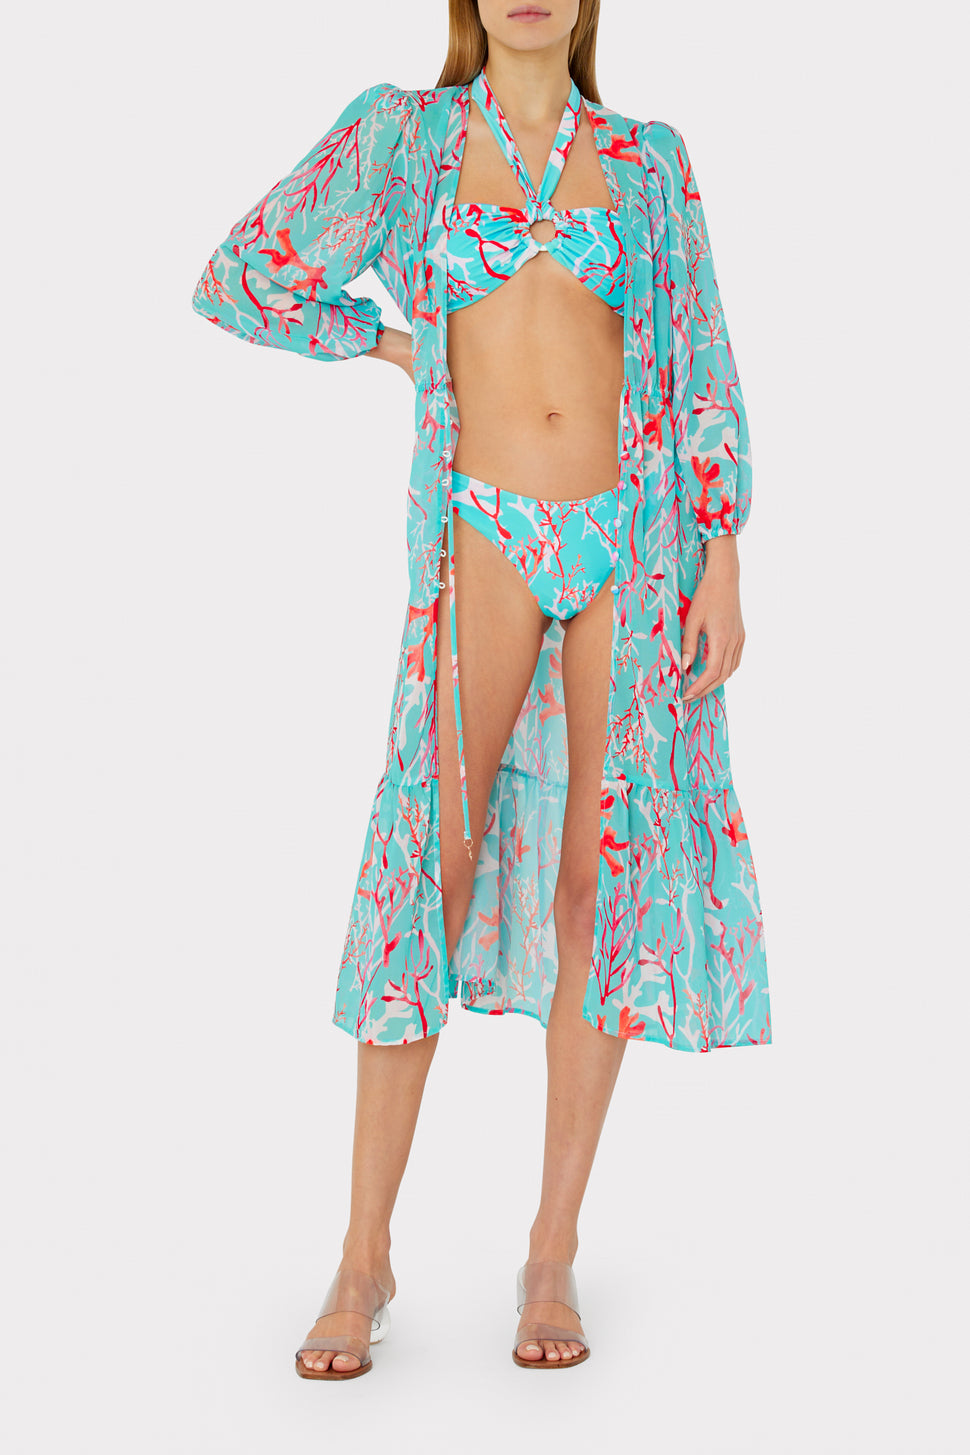 Fiona Marine Coral Long Sleeve Swim Coverup Midi Dress | MILLY | Jerseykleider